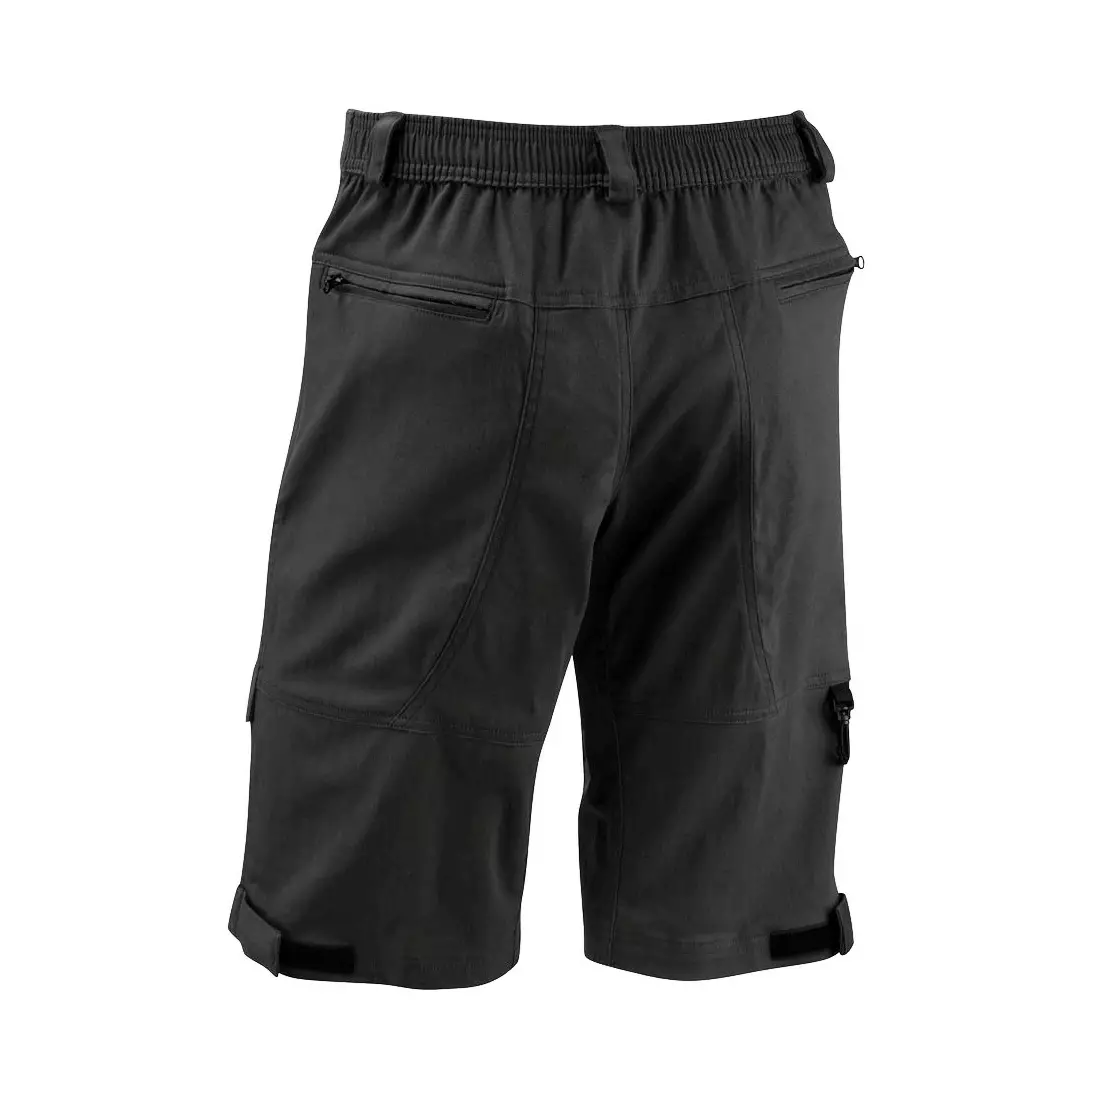 TENN OUTDOORS Men's COMBAT cycling shorts, black